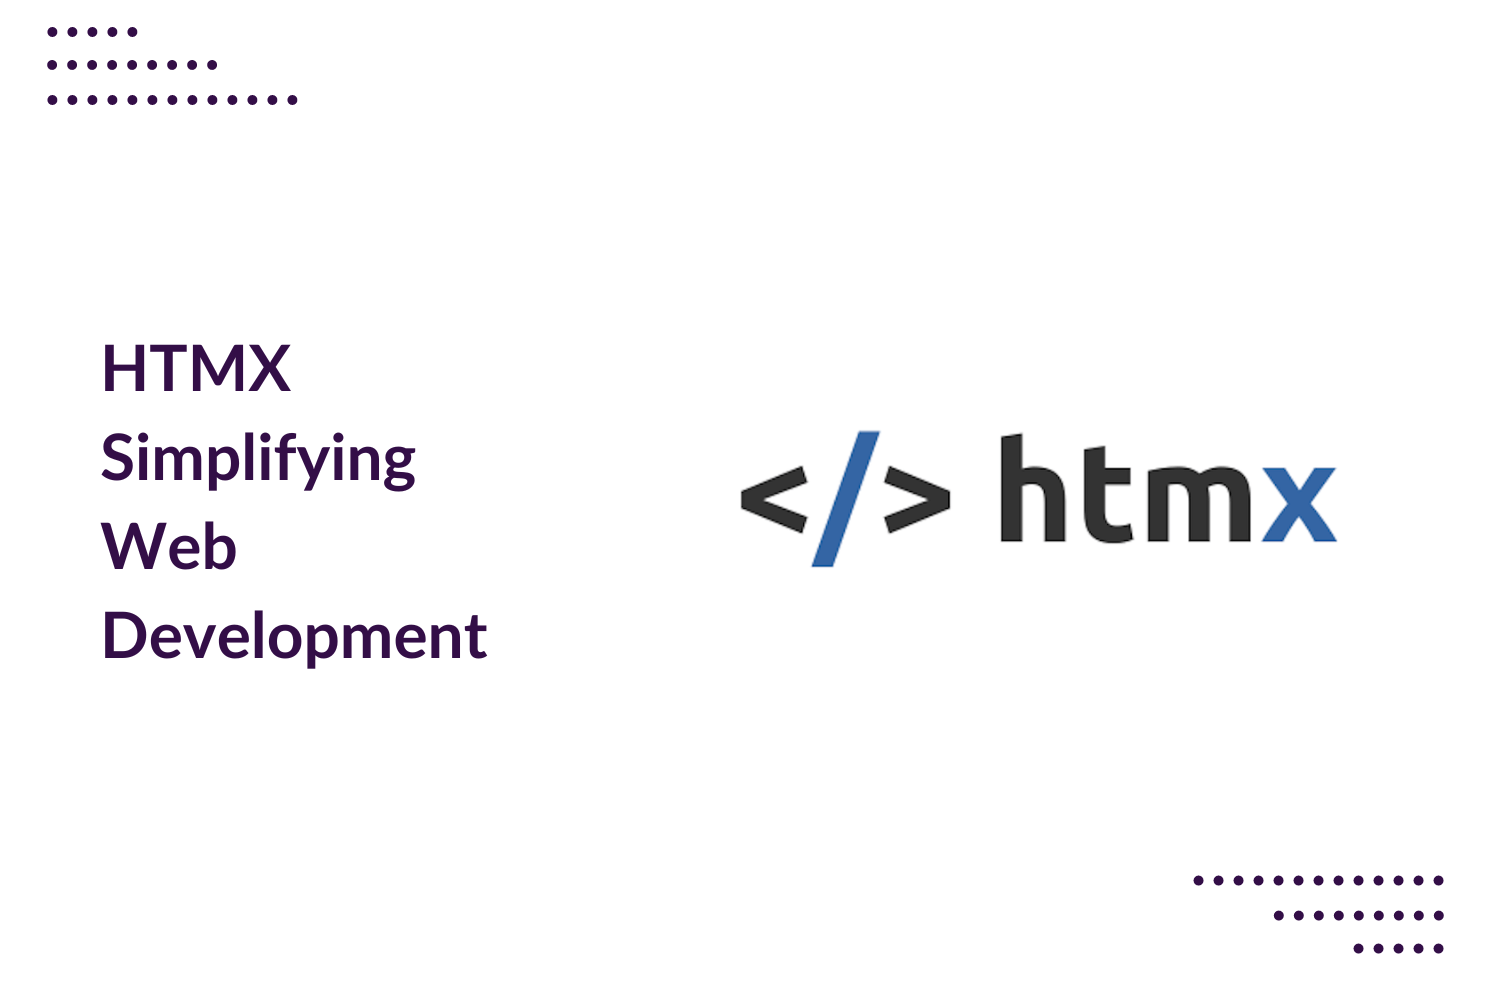 HTMX Simplifying Web Development